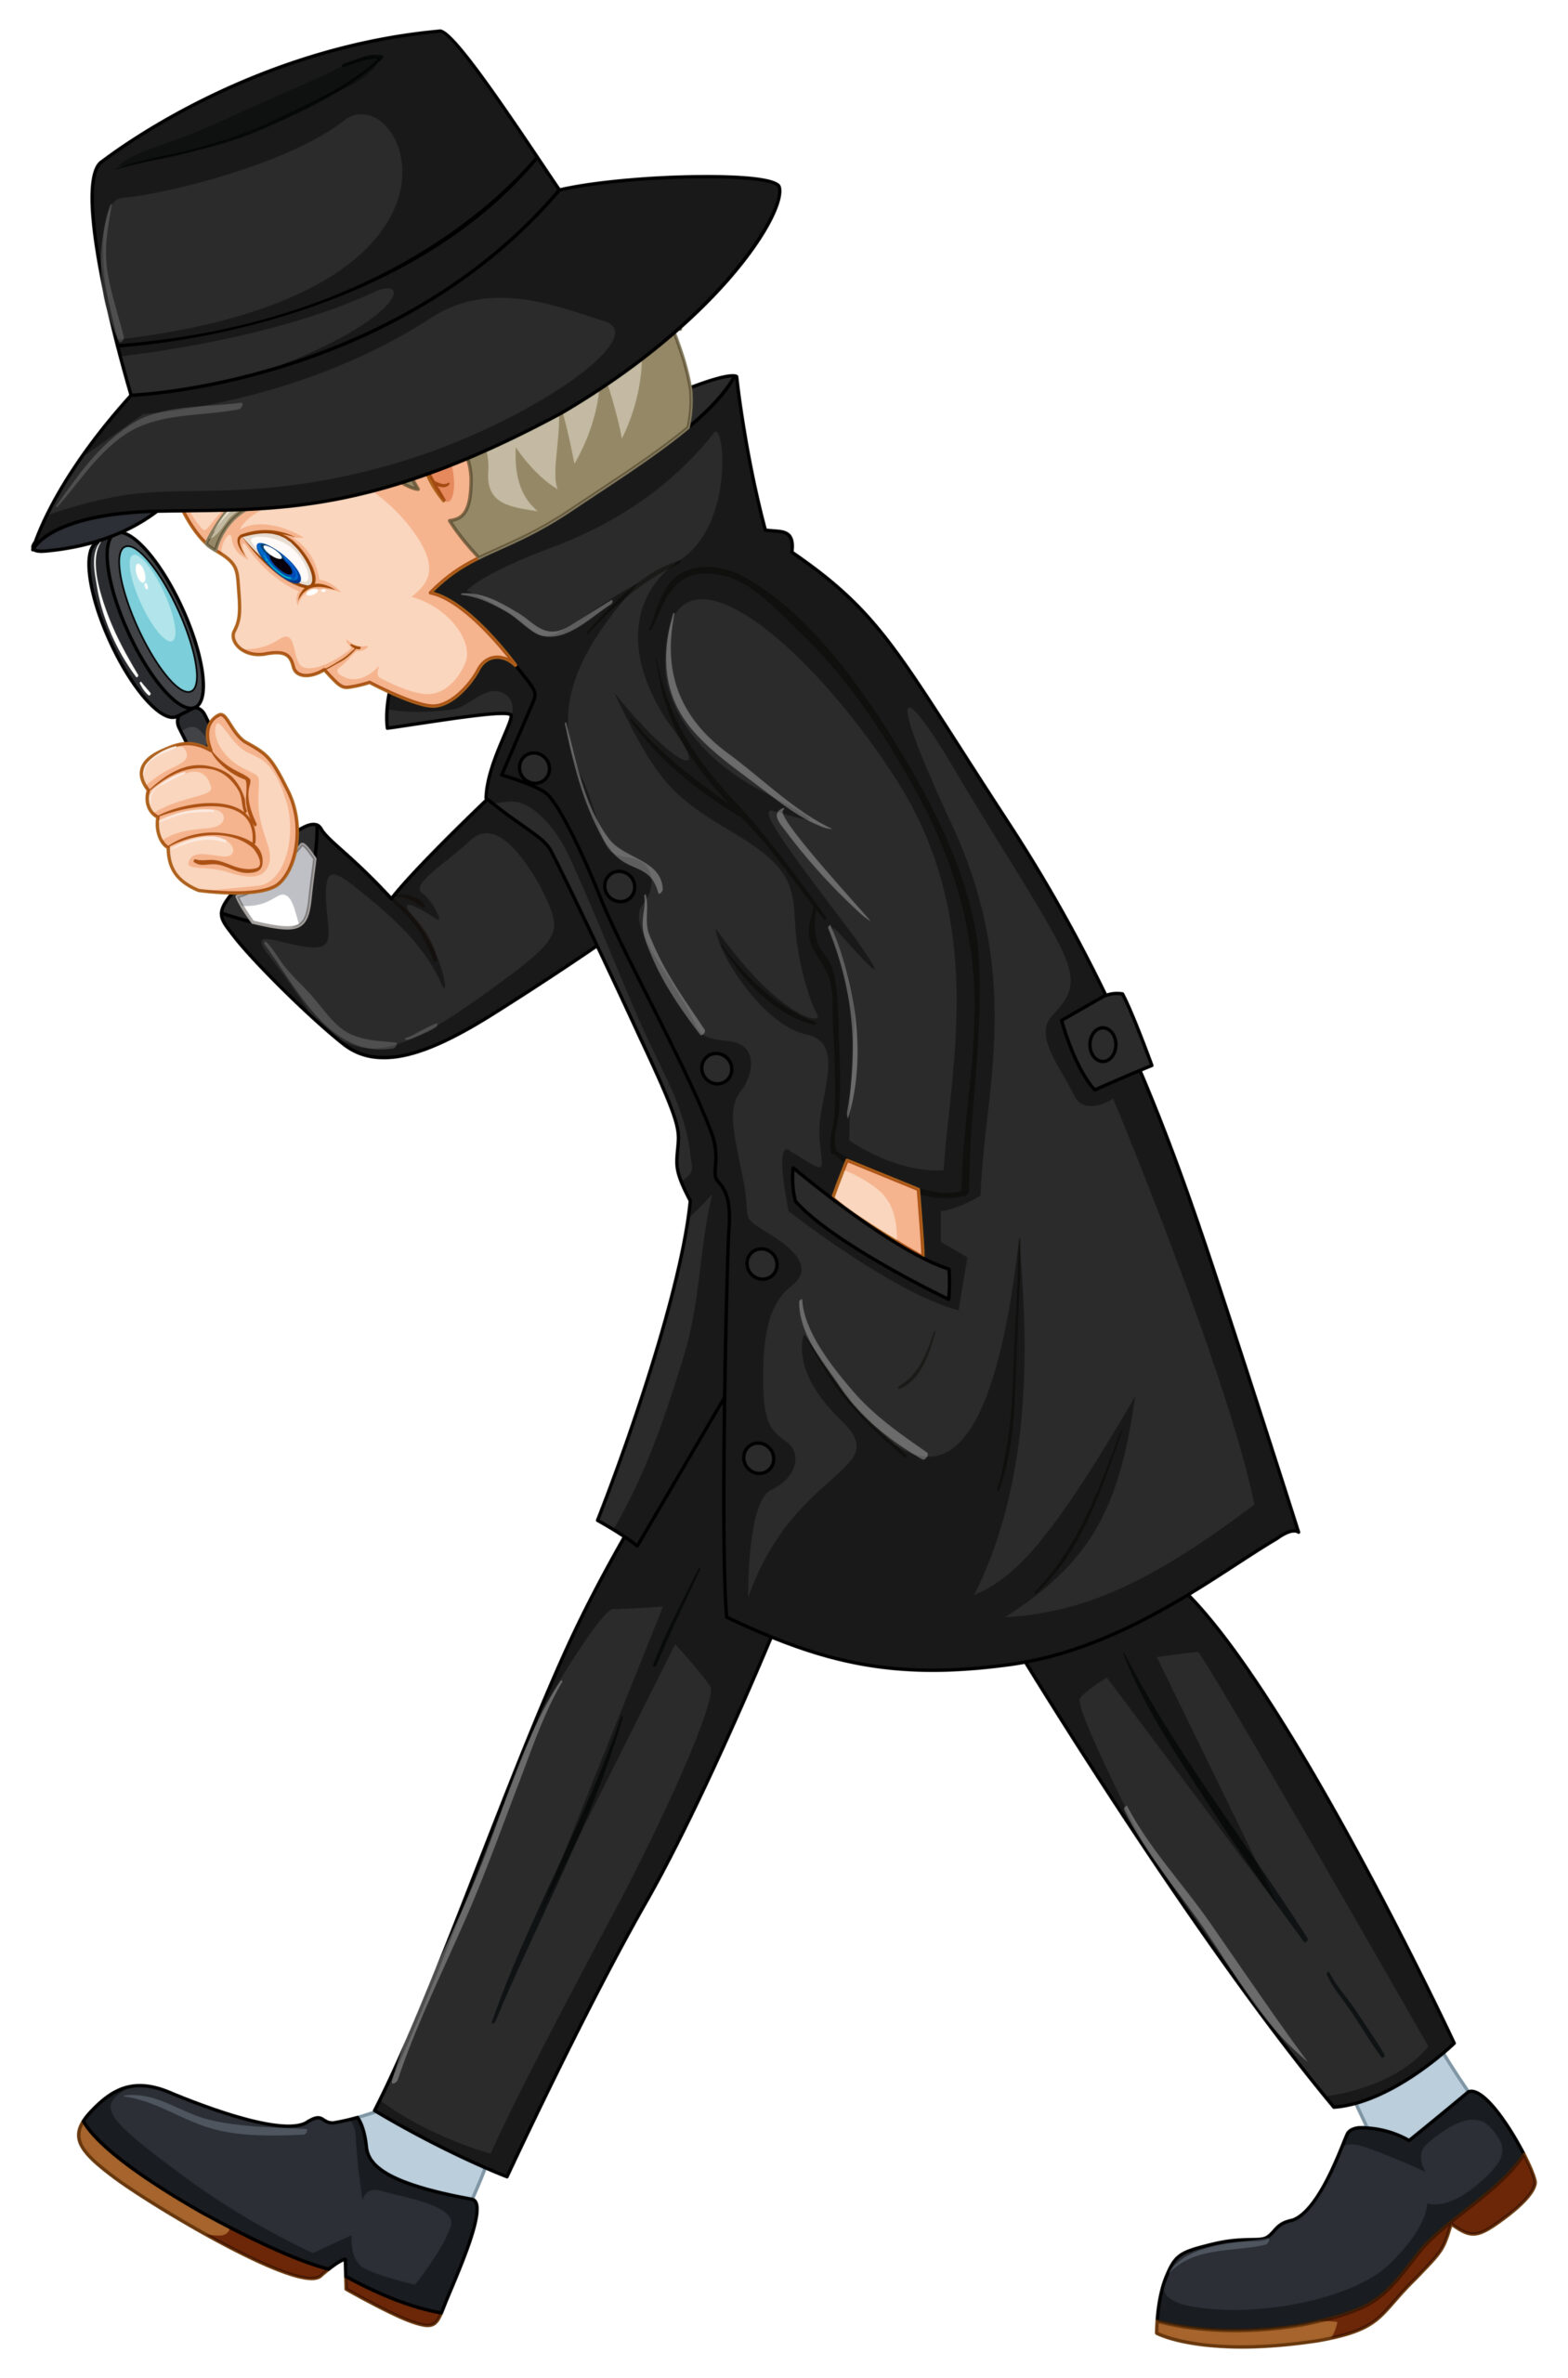 Detective in black overcoat holding magnifying glass illustration